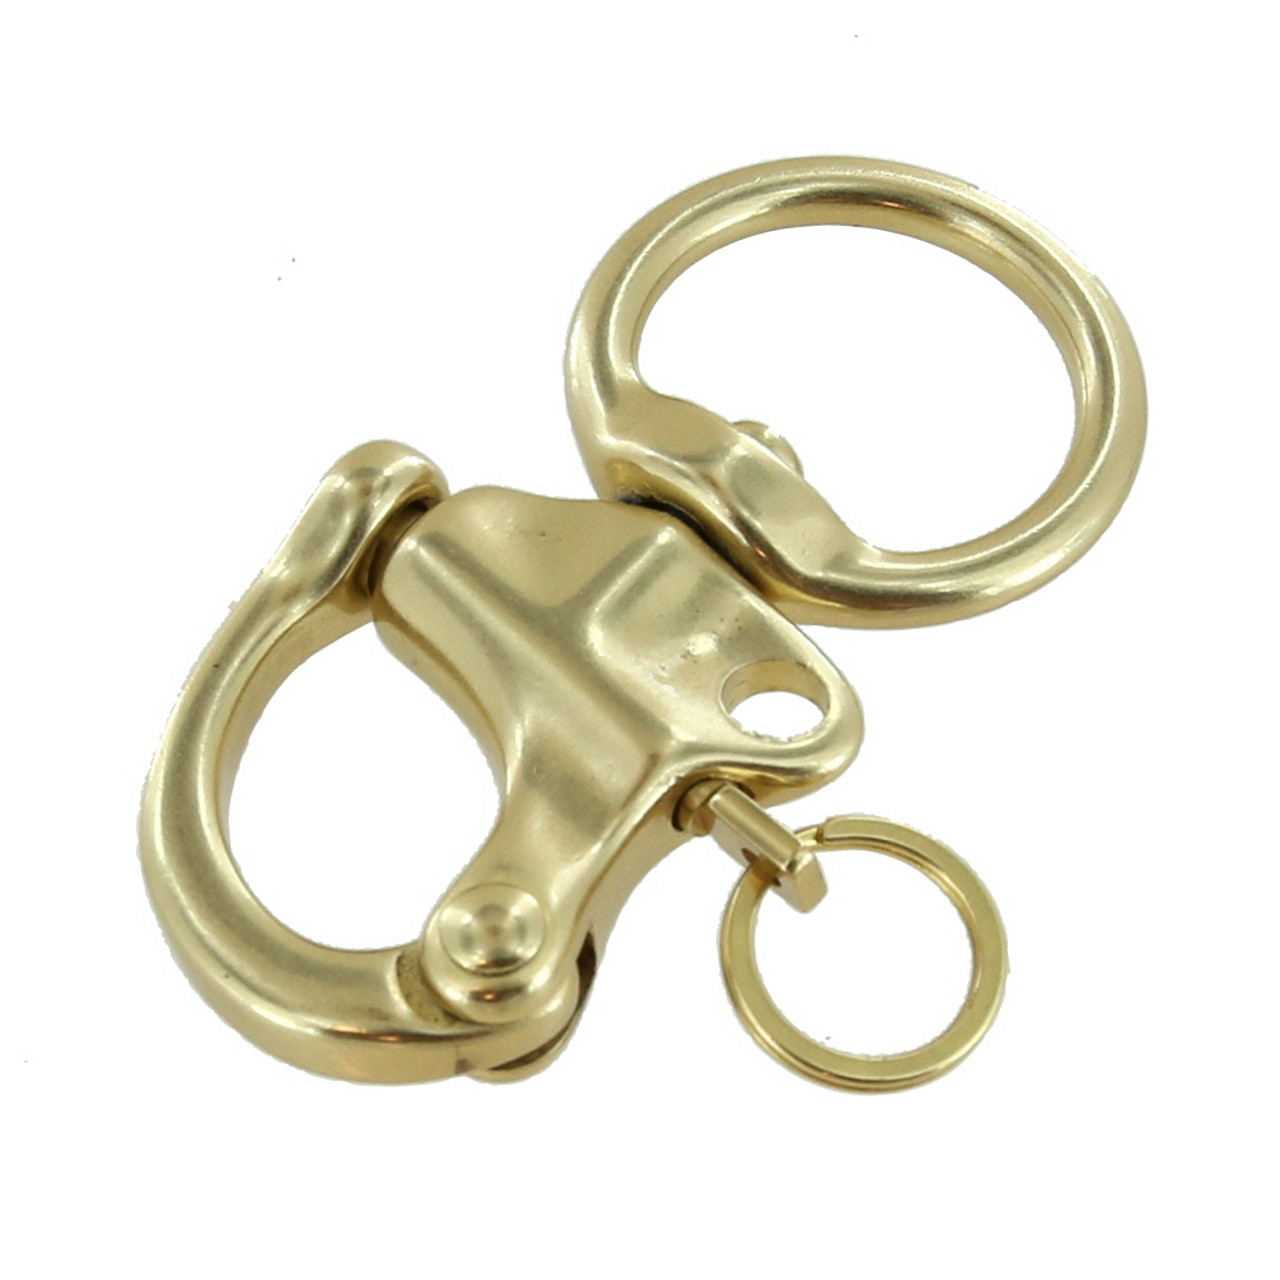 MSbeadsupplies 10 Pcs Locking Key Ring with Snake Chain